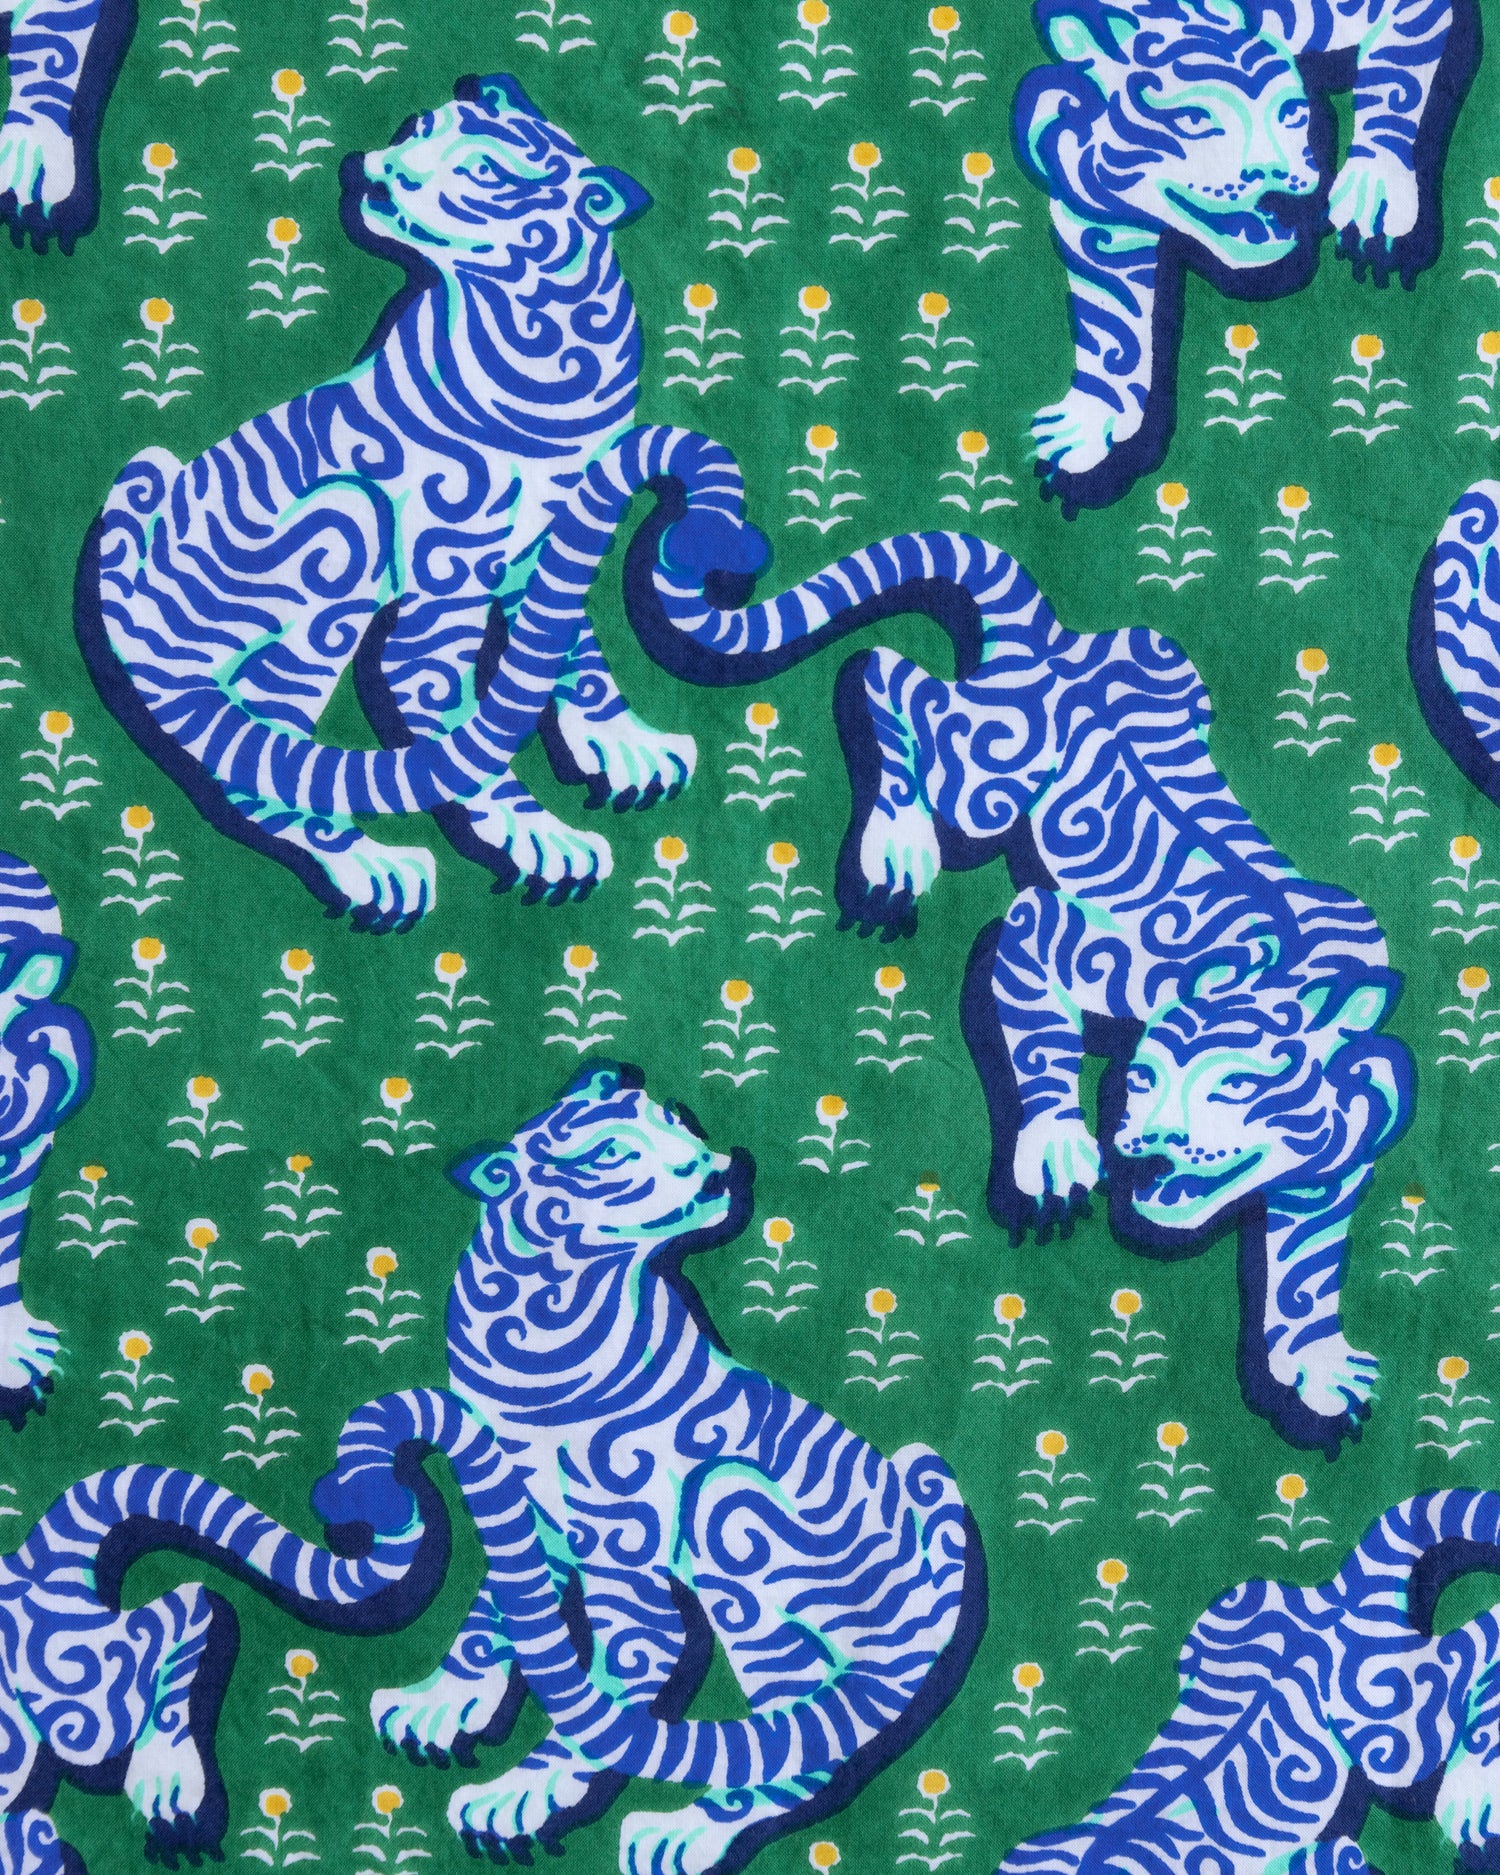 Tiger Queen - Quilted Duffle Bag - Jade - Printfresh